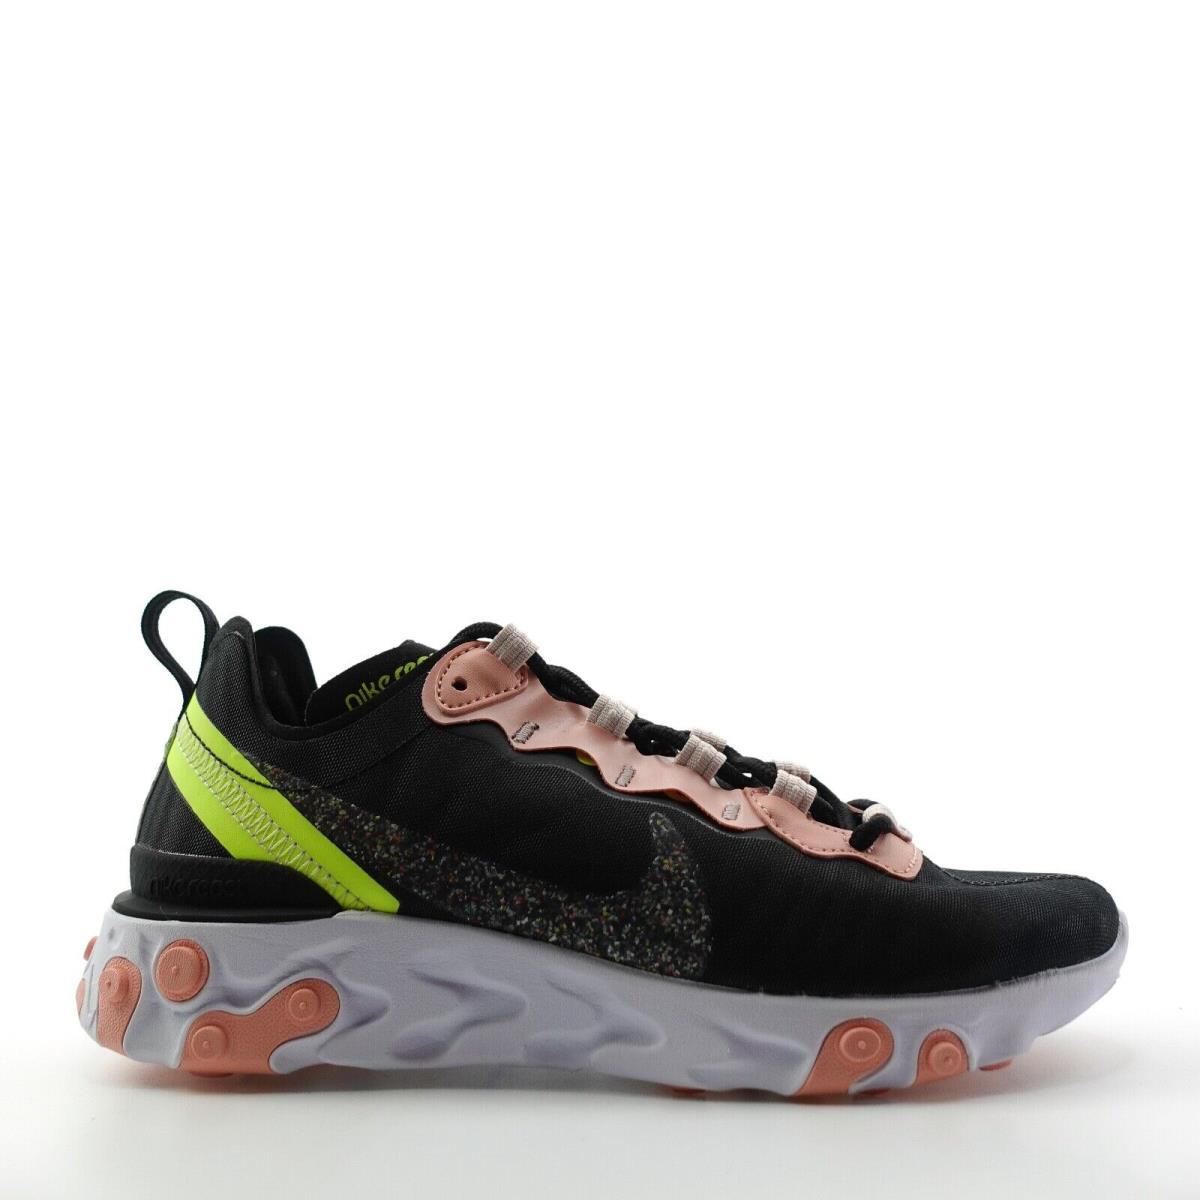 Nike React Element 55 Prm Shoes Black Coral Womens Size 6.5 CD6964-002